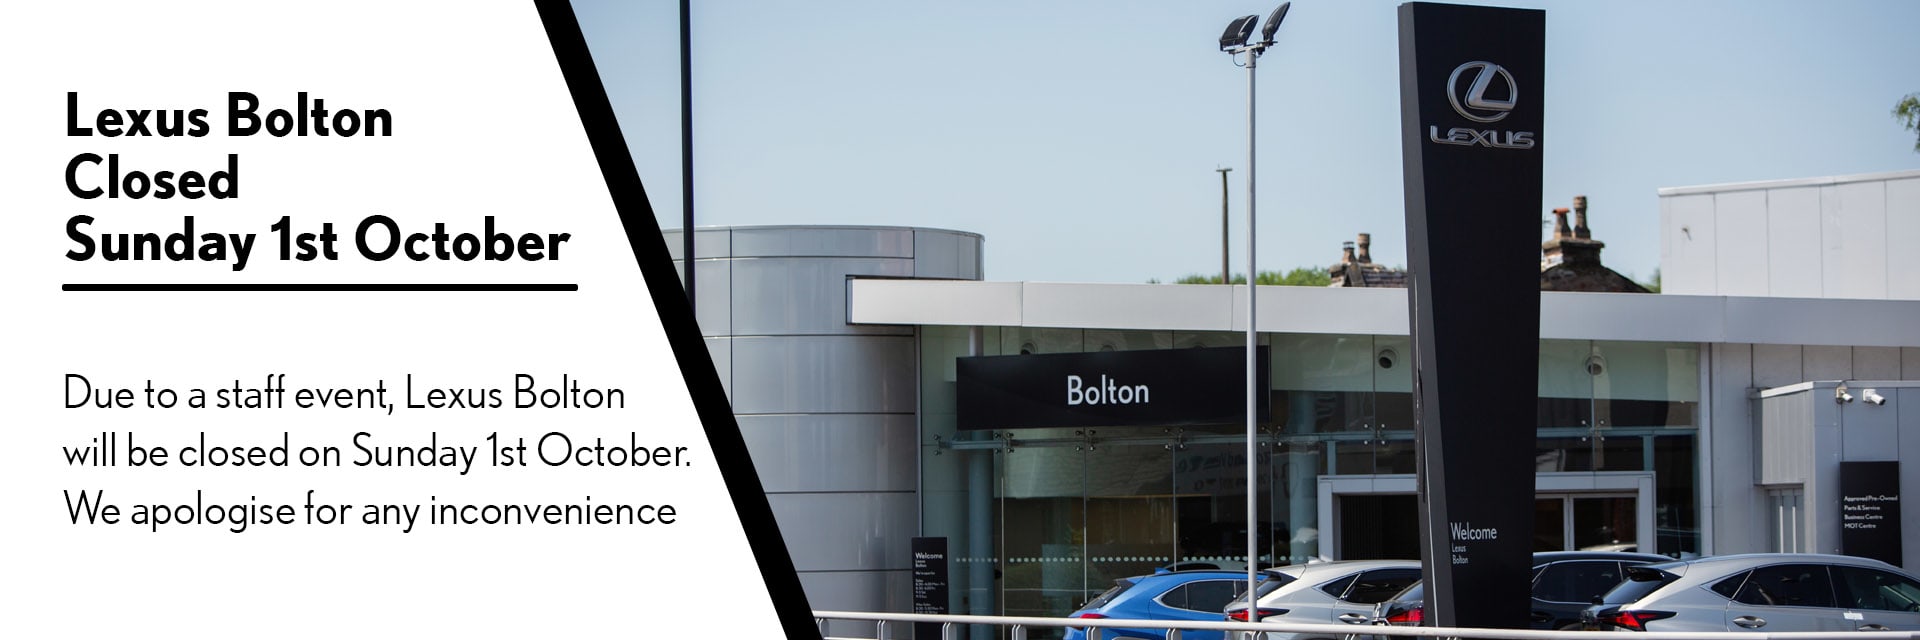 Lexus Bolton Closed Sunday 1st October